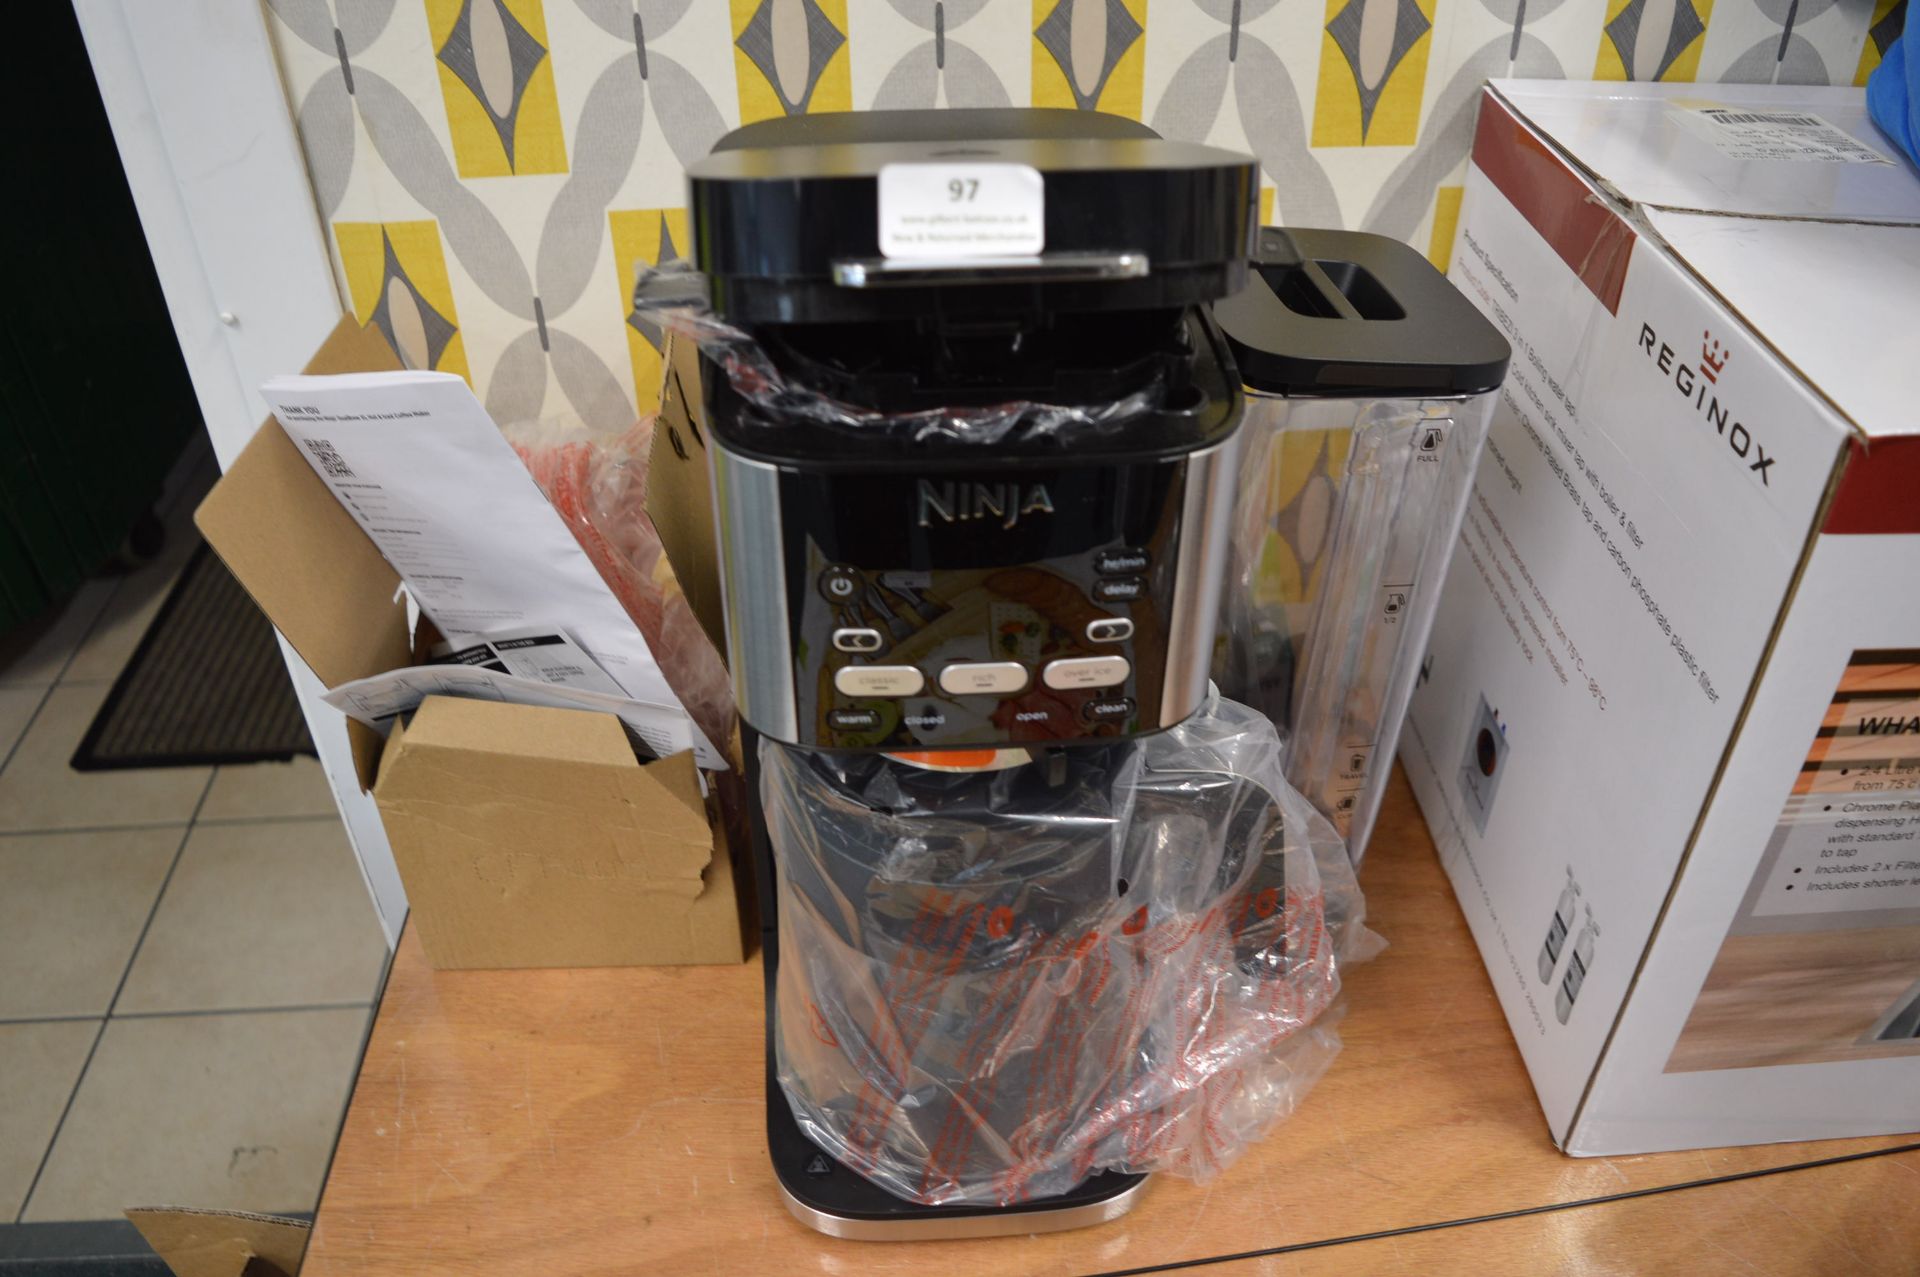 *Ninja Dual Brew Coffee Machine